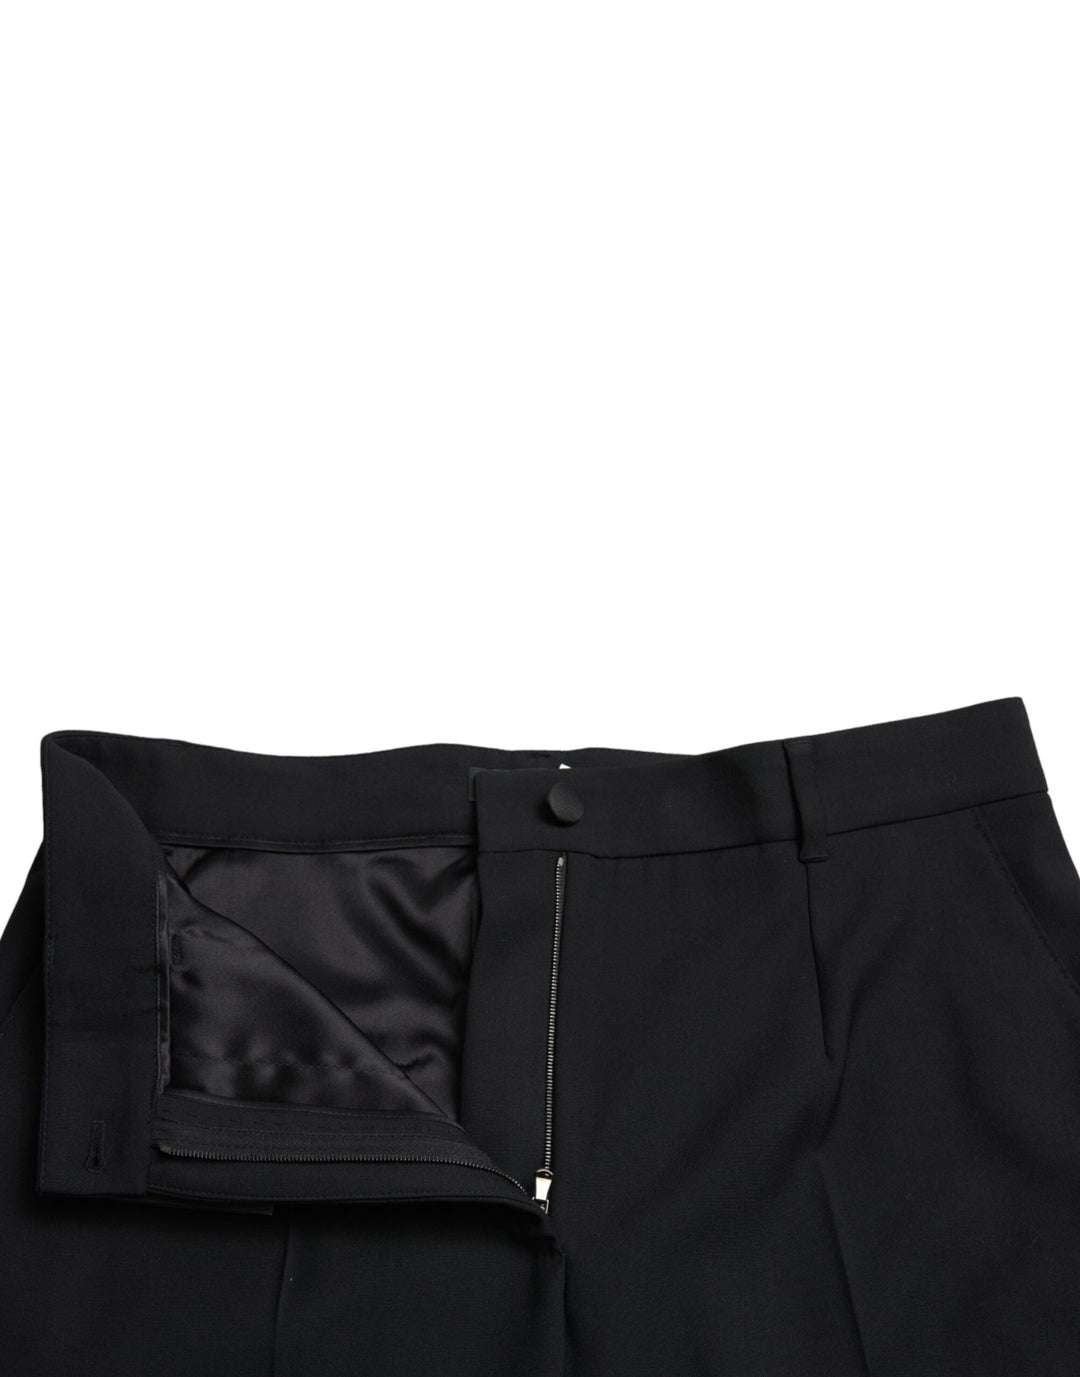 Dolce & Gabbana Black Wool High Waist Straight Pants